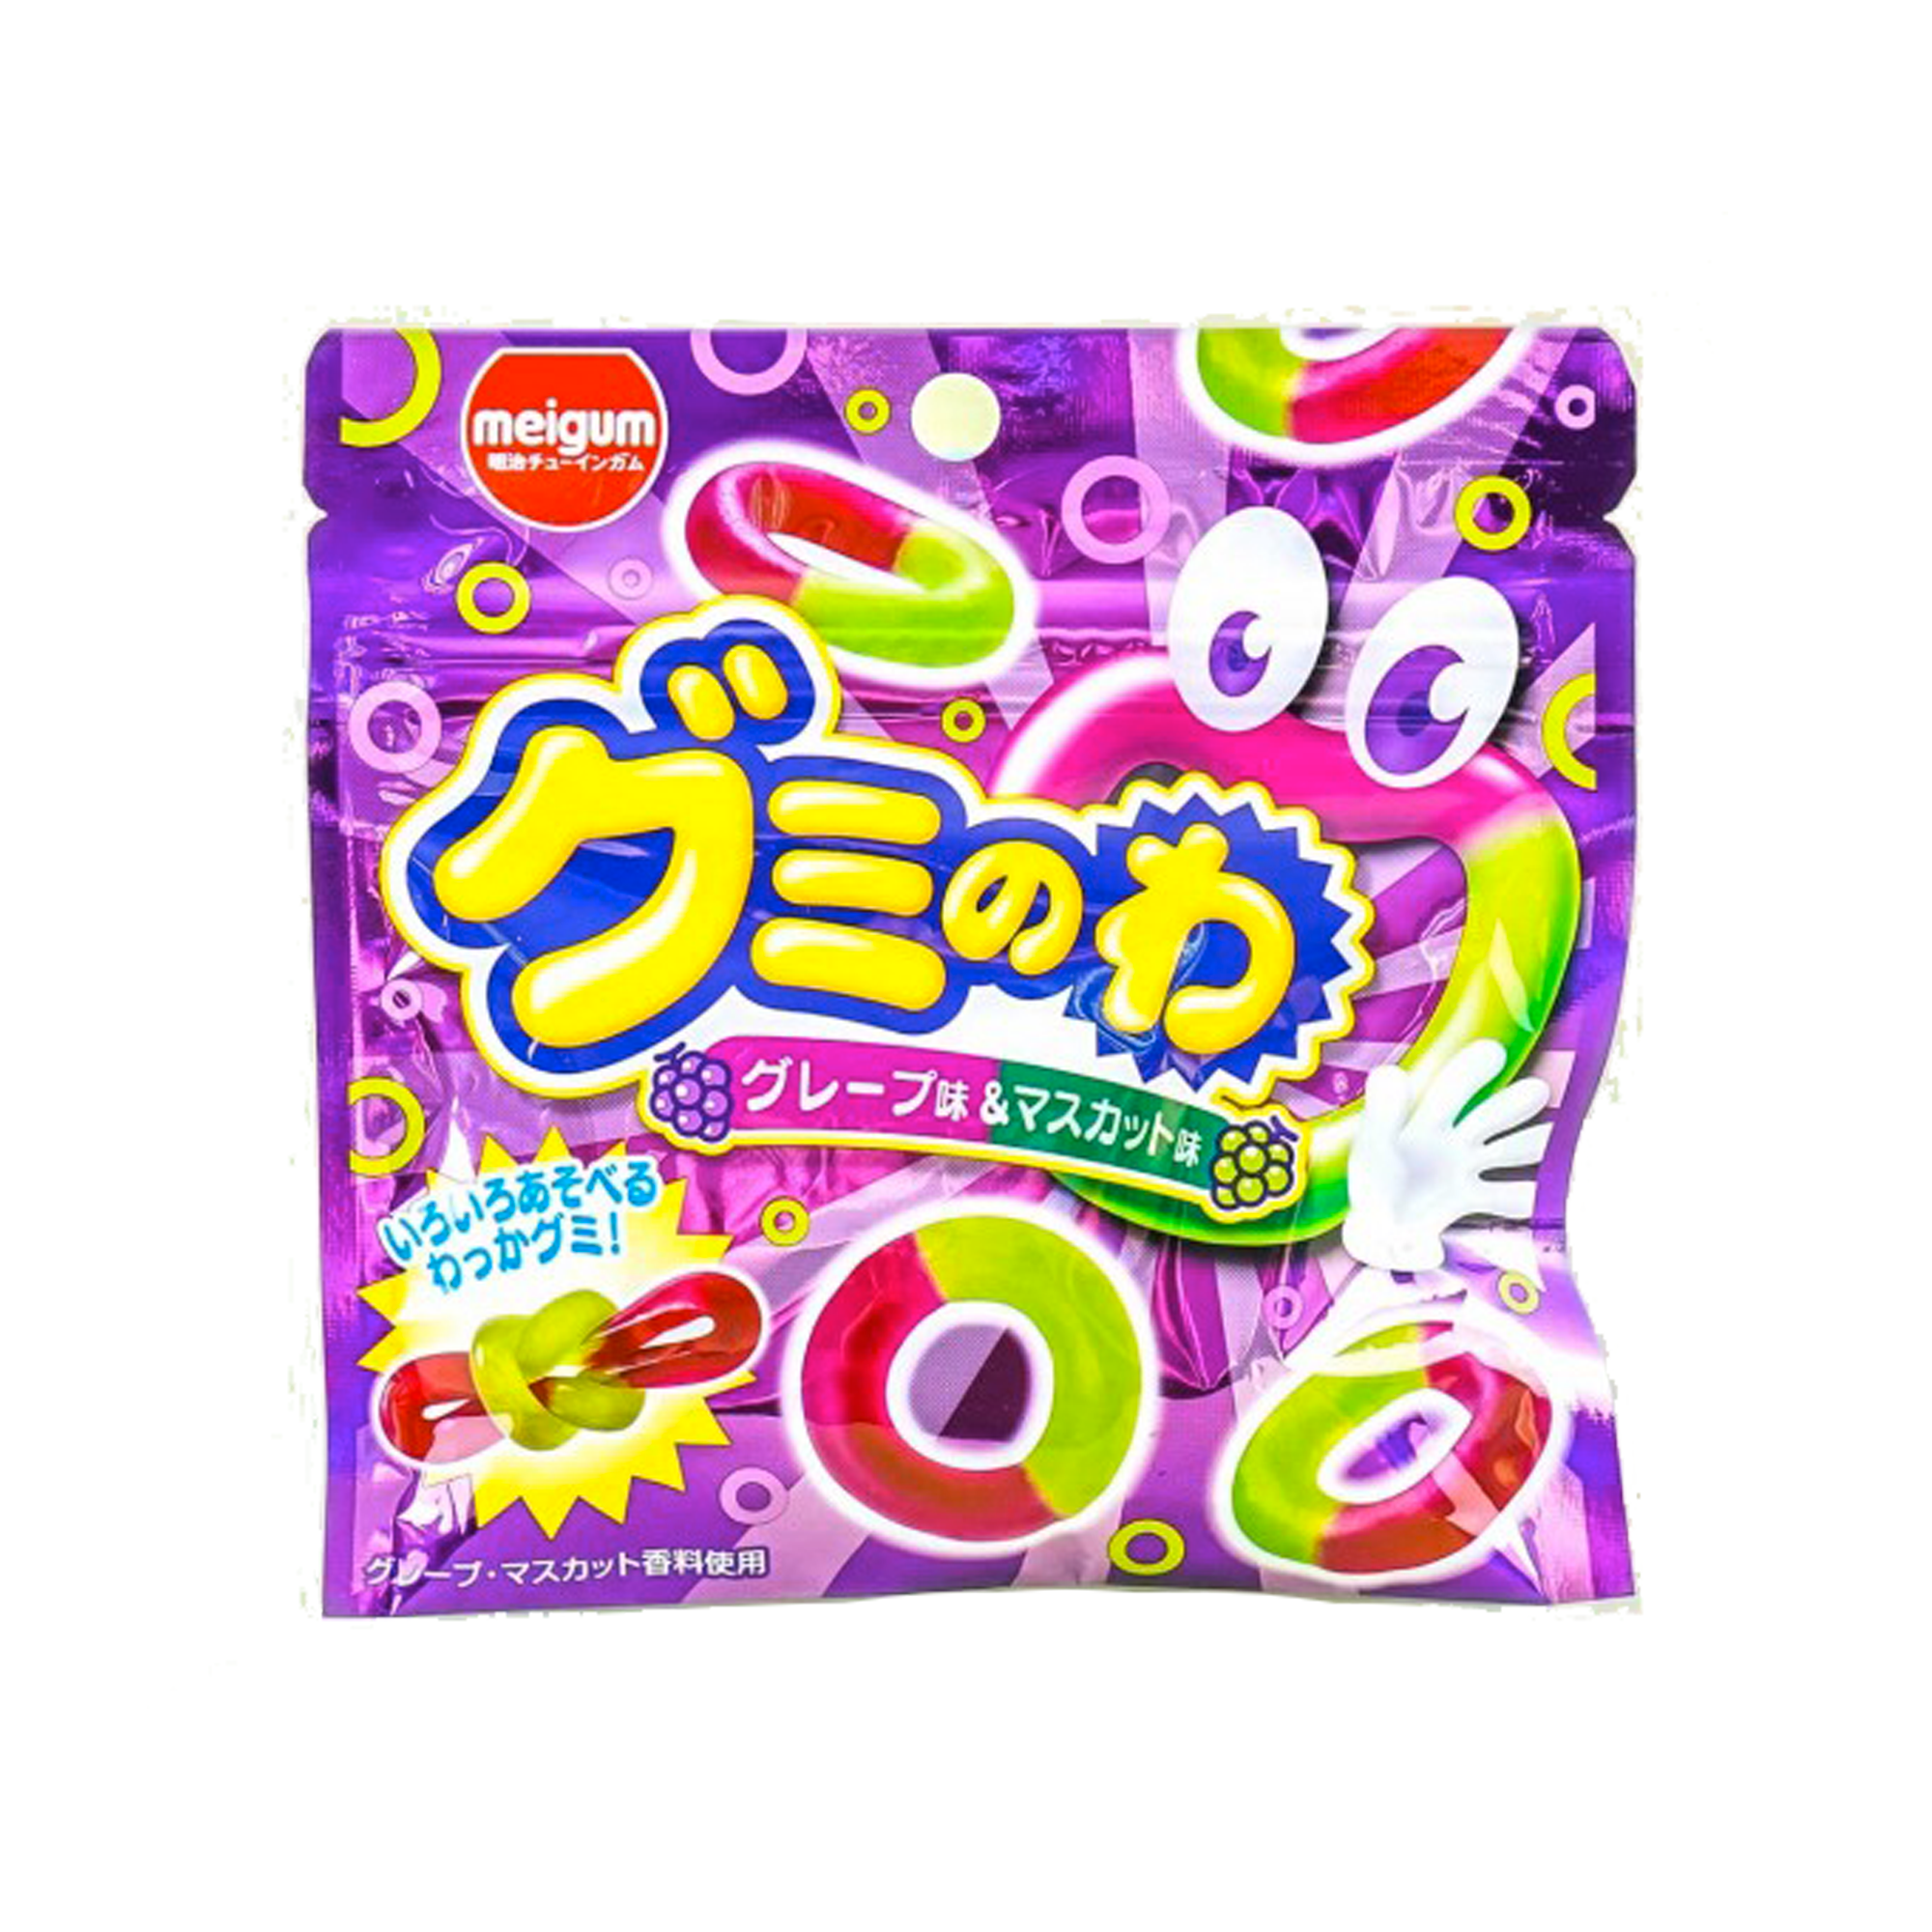 Monster Tétine Zed Candy Gum Chewing Gum Explosif